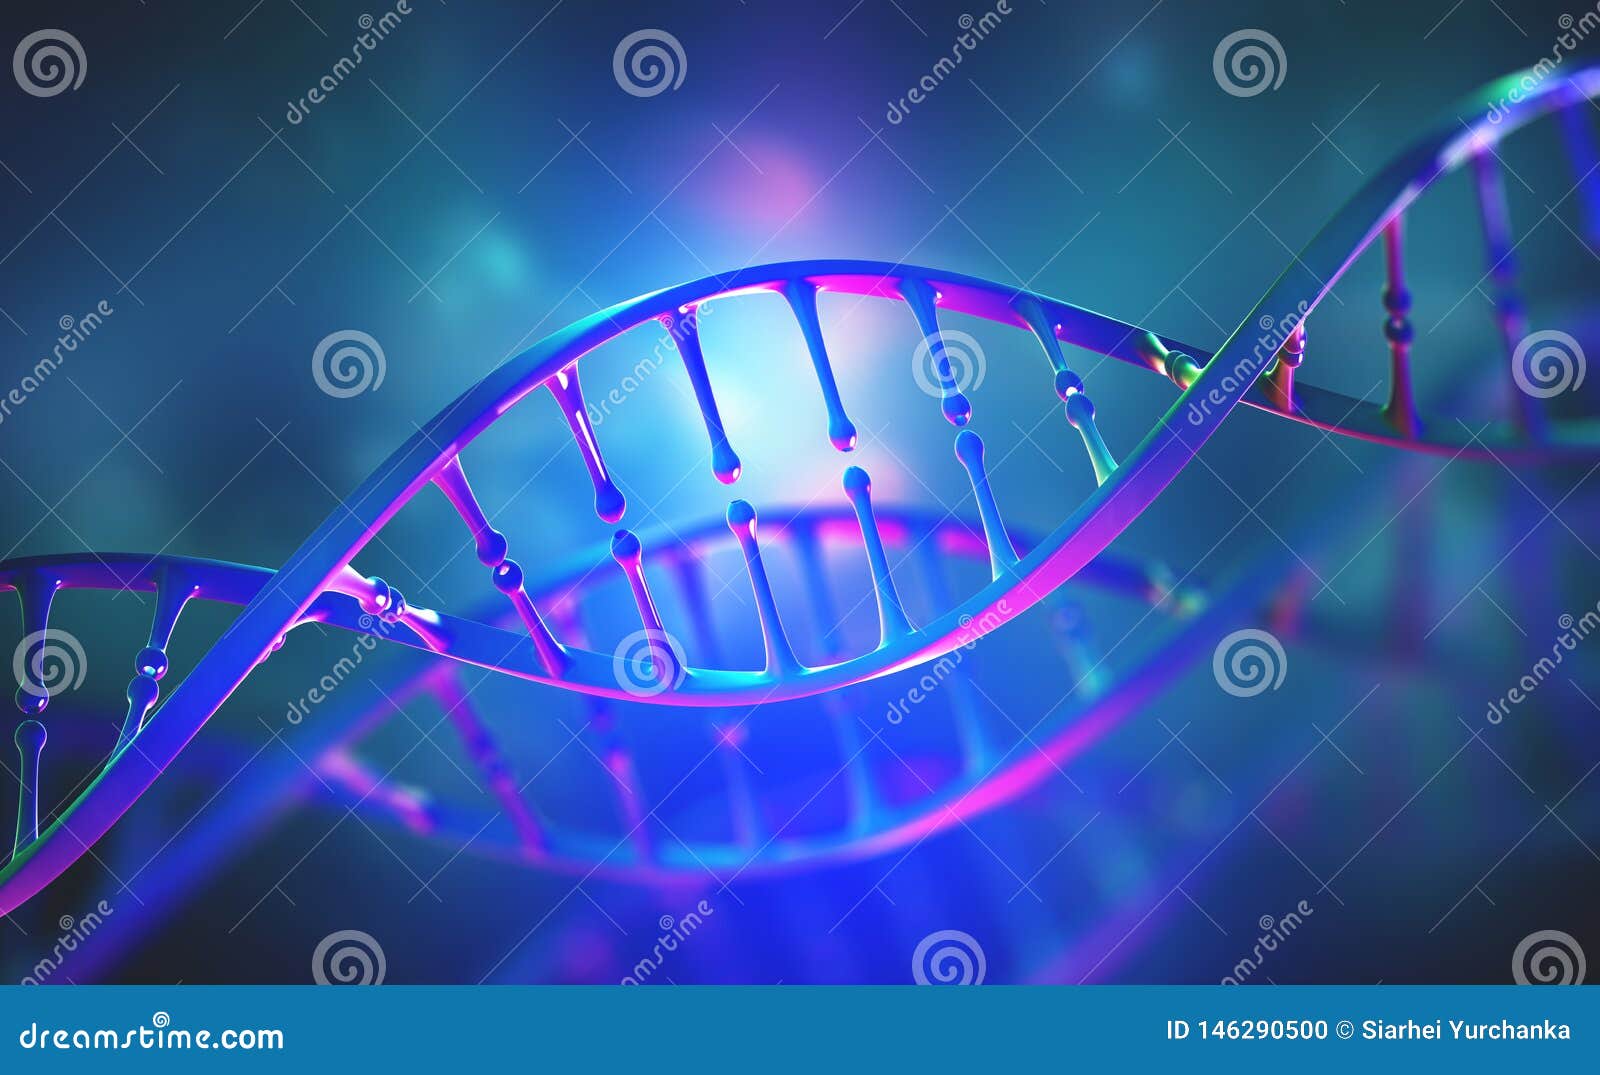 dna genome research. bright neon light. dna molecule structure